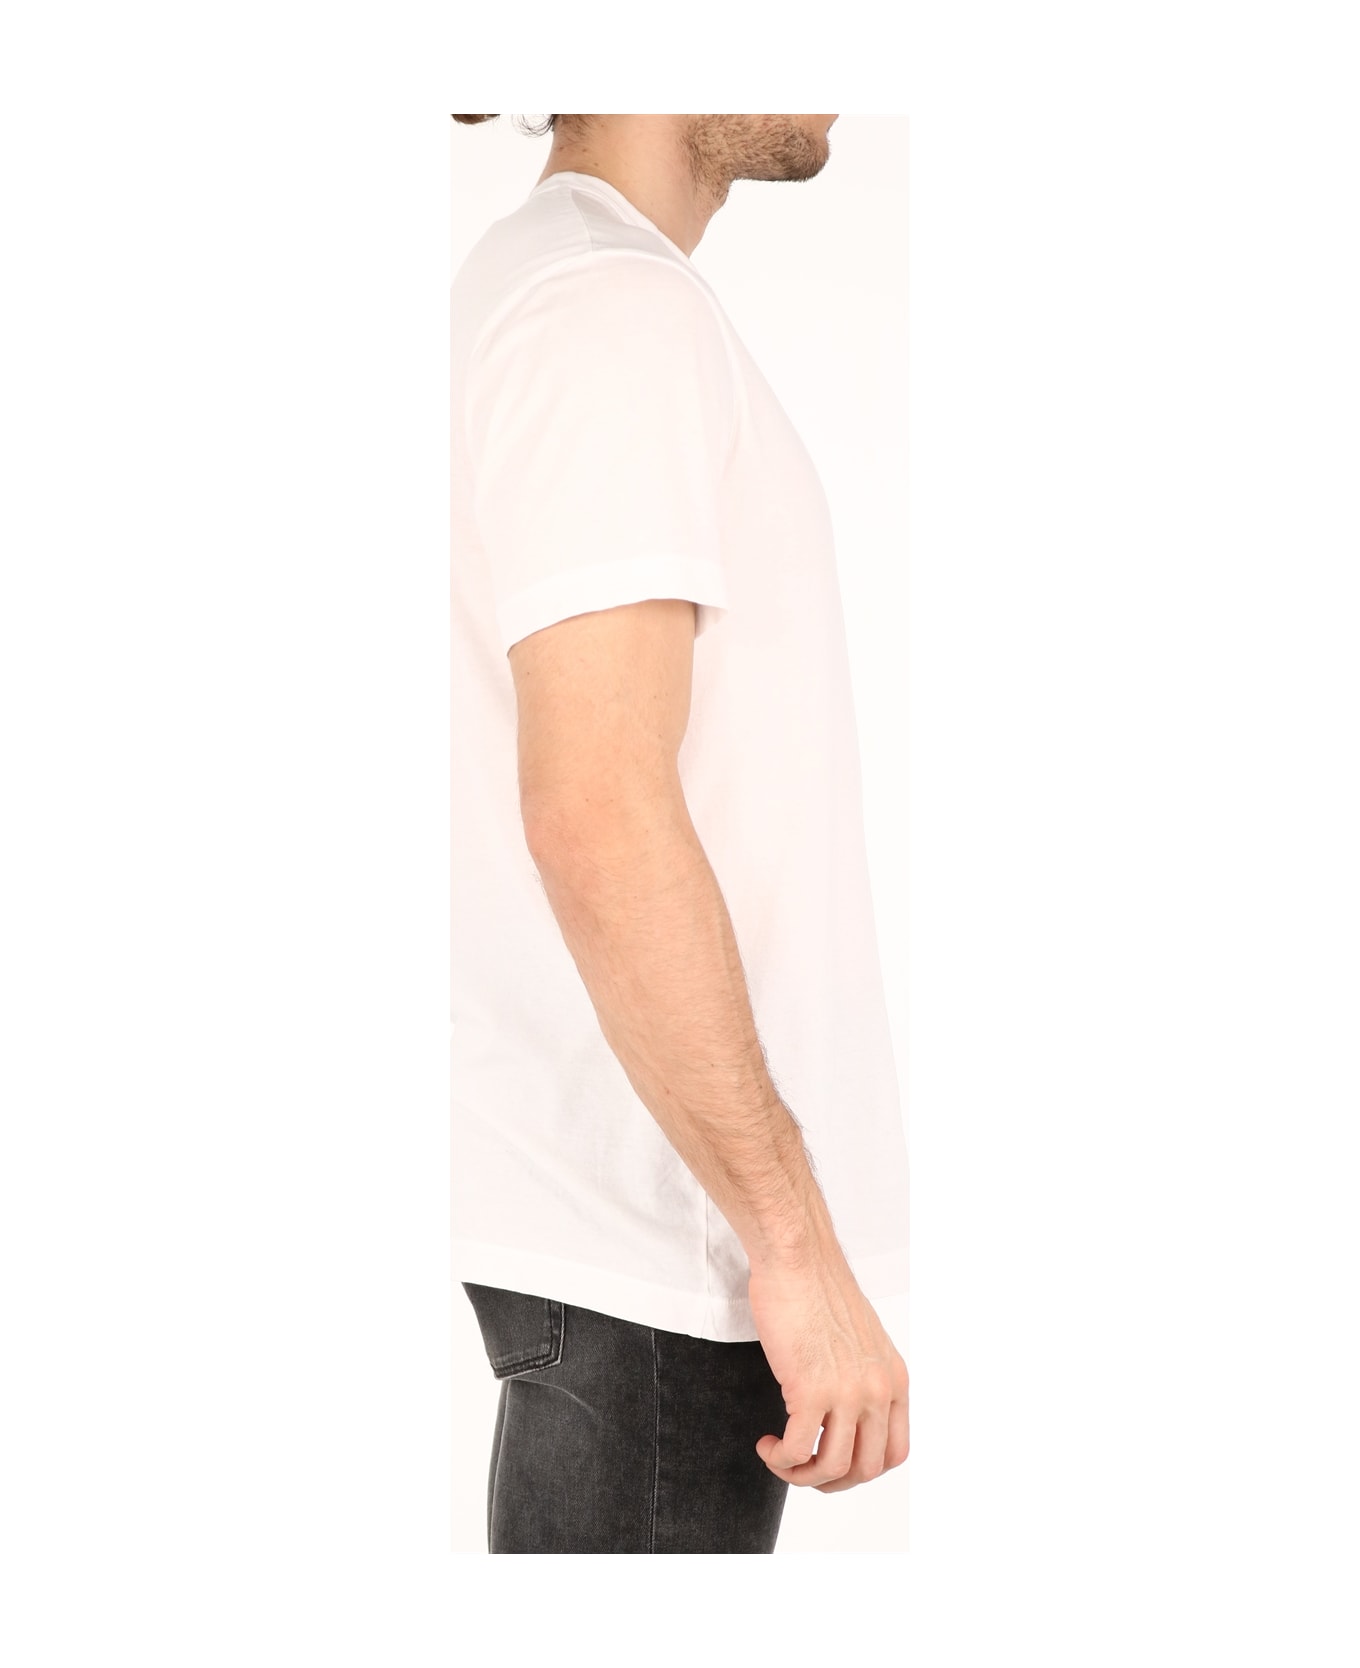 James Perse White Cotton T-shirt - WHITE シャツ